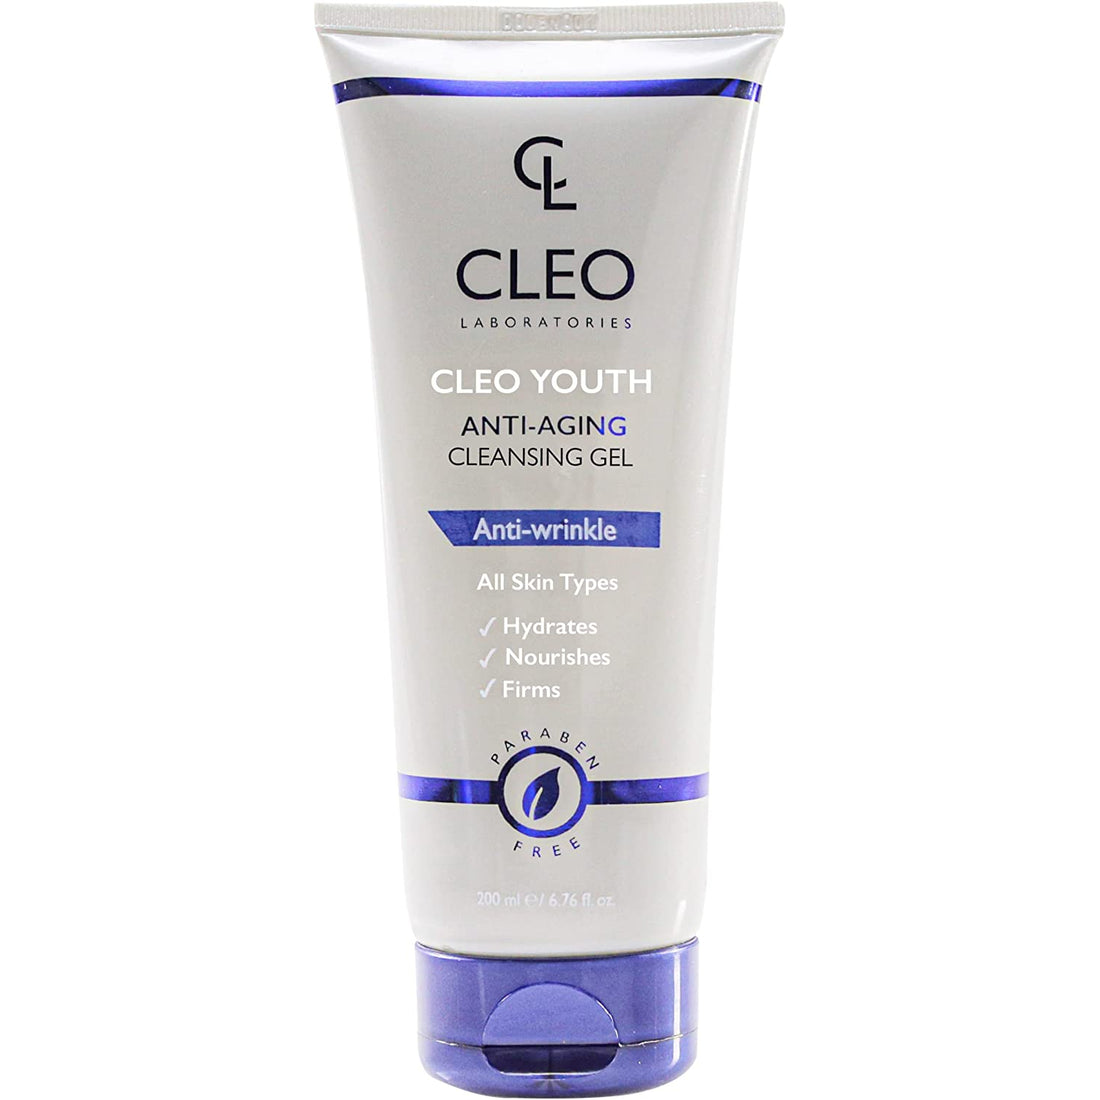 Cleo Laboratories Anti-Aging Cleansing Gel